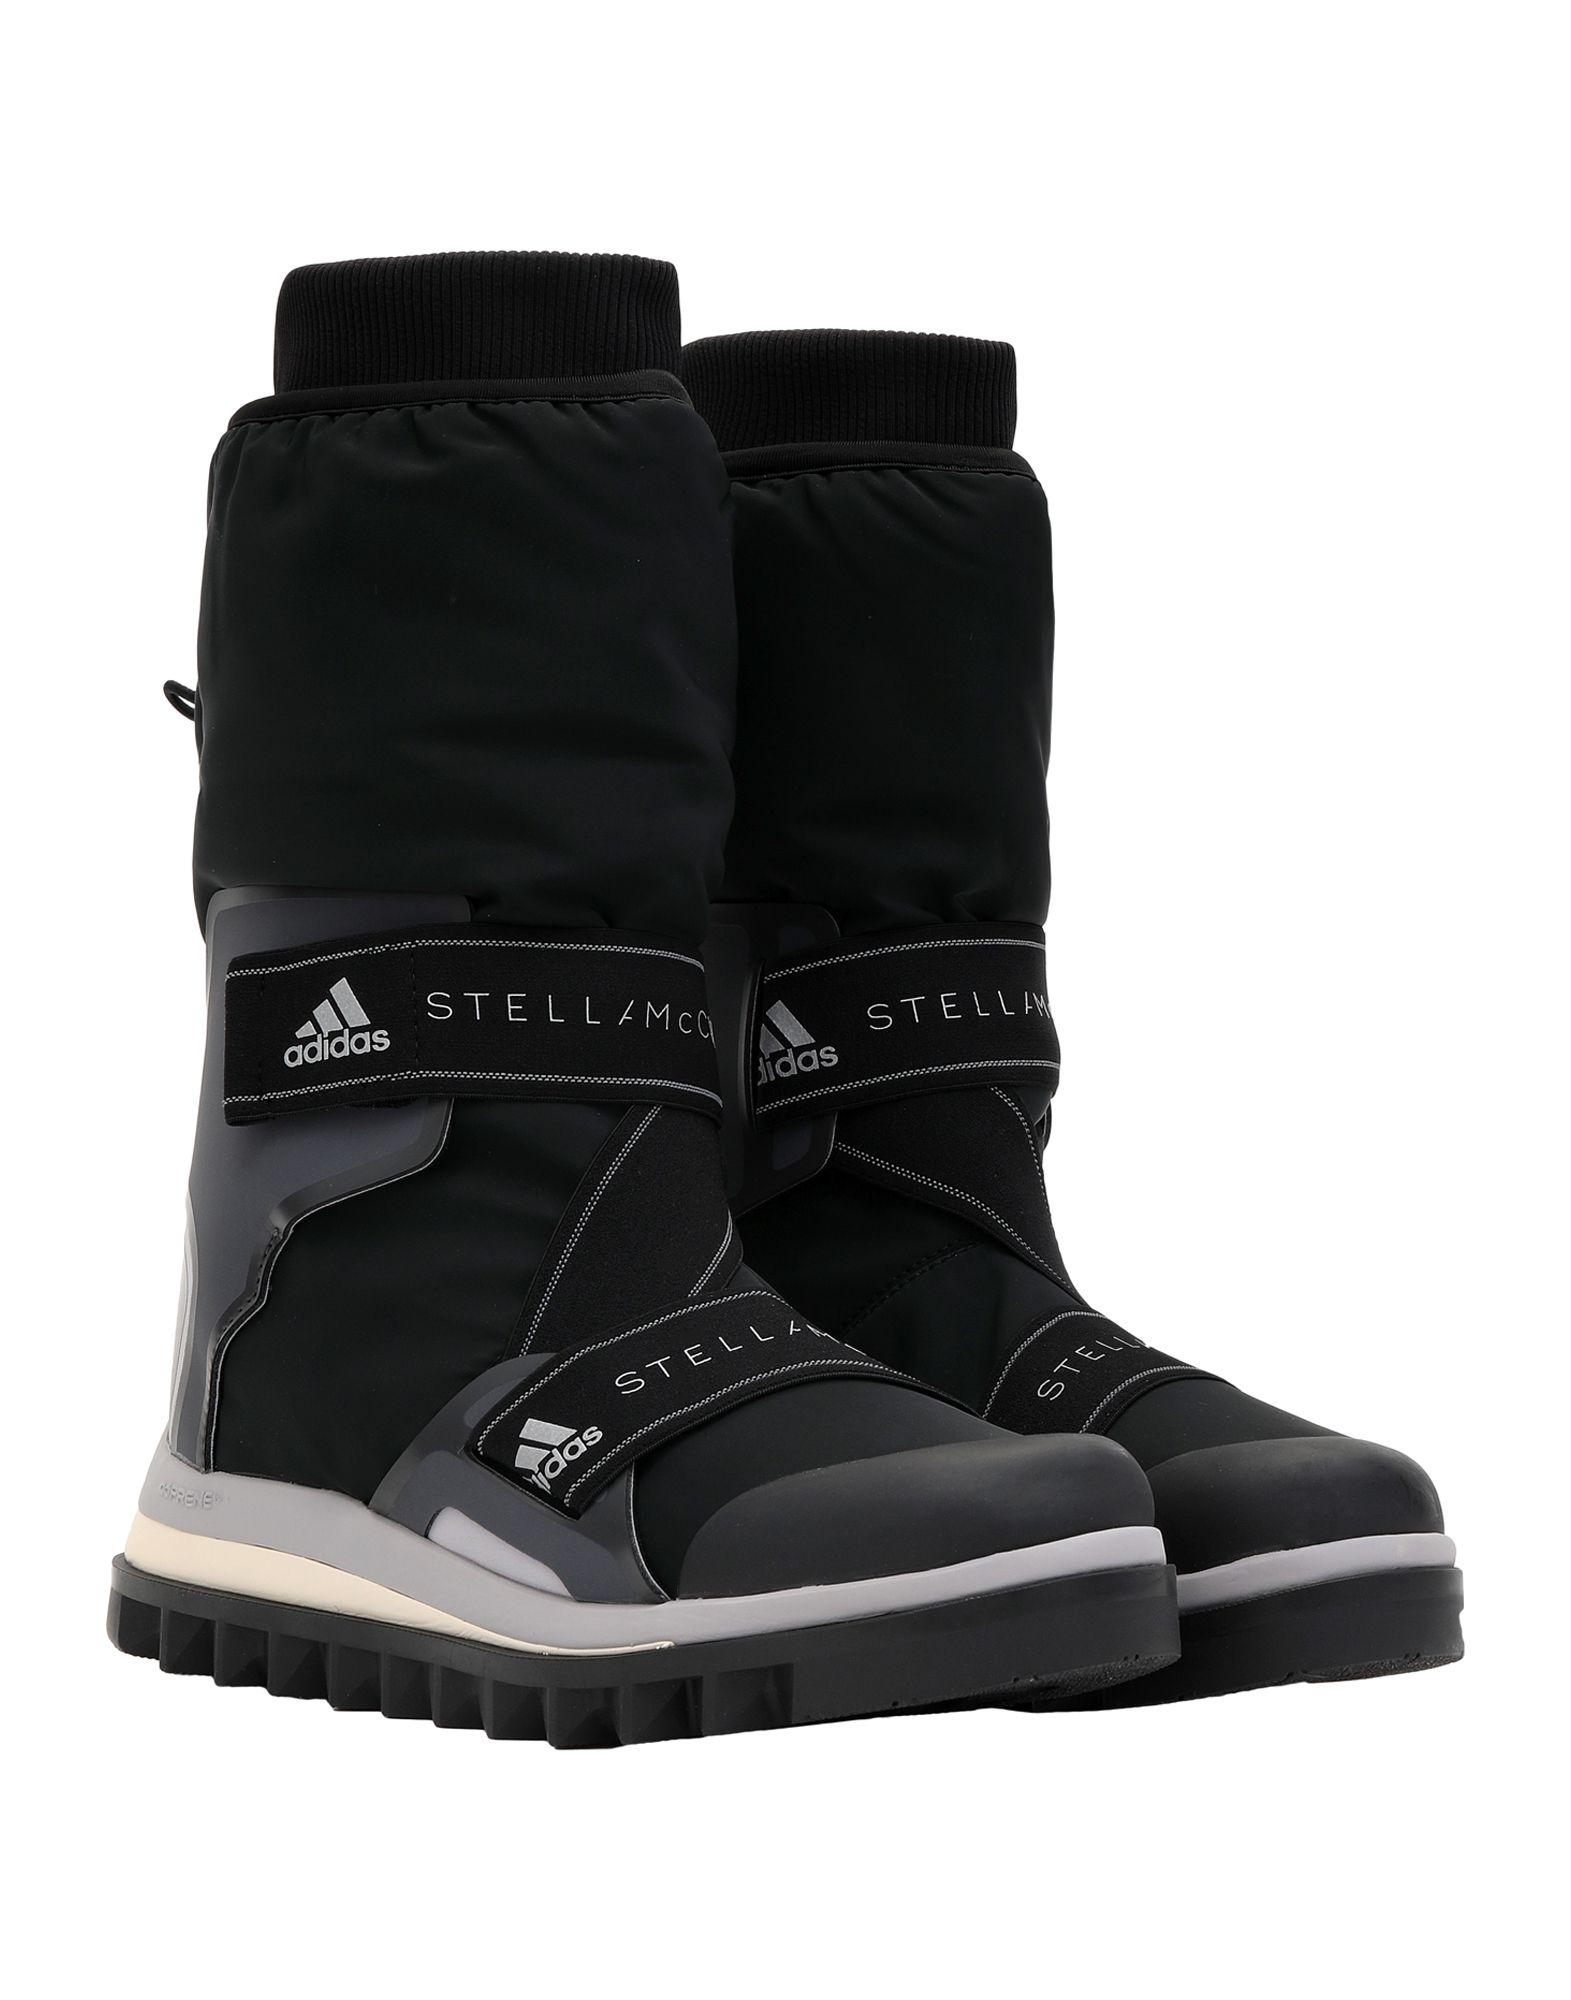 stella mccartney winter boot